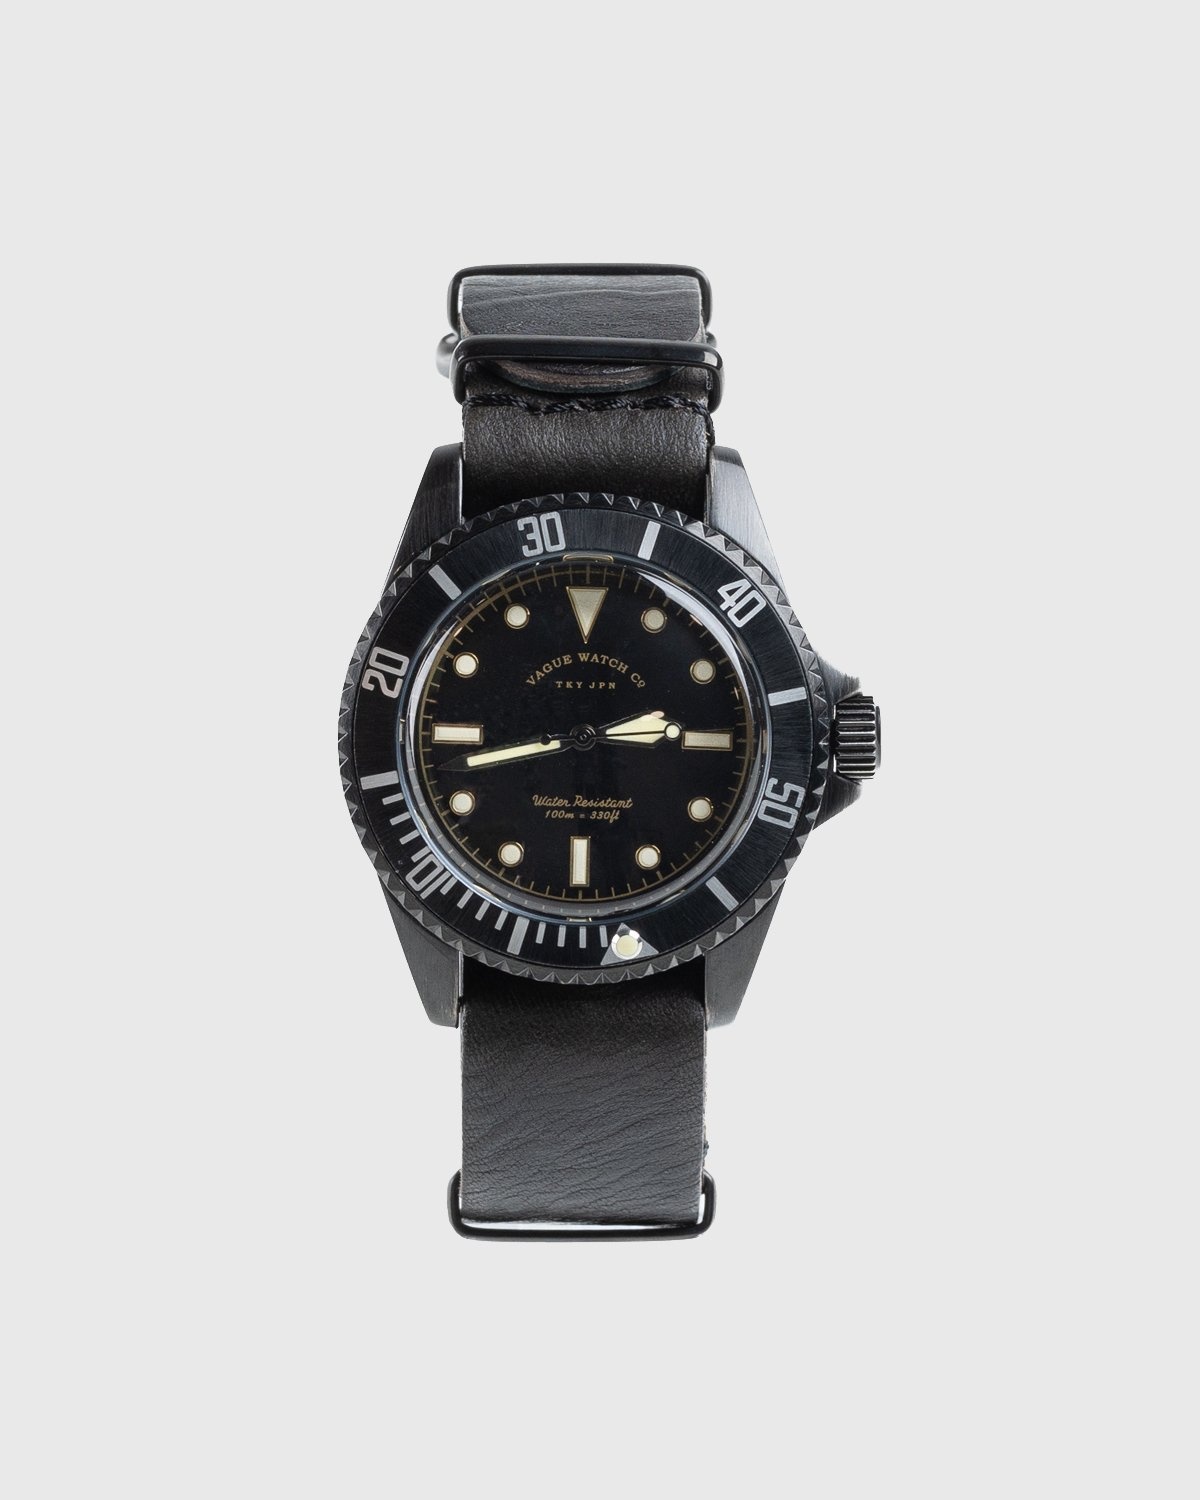 Vague Watch Co. – Submariner Black | Highsnobiety Shop